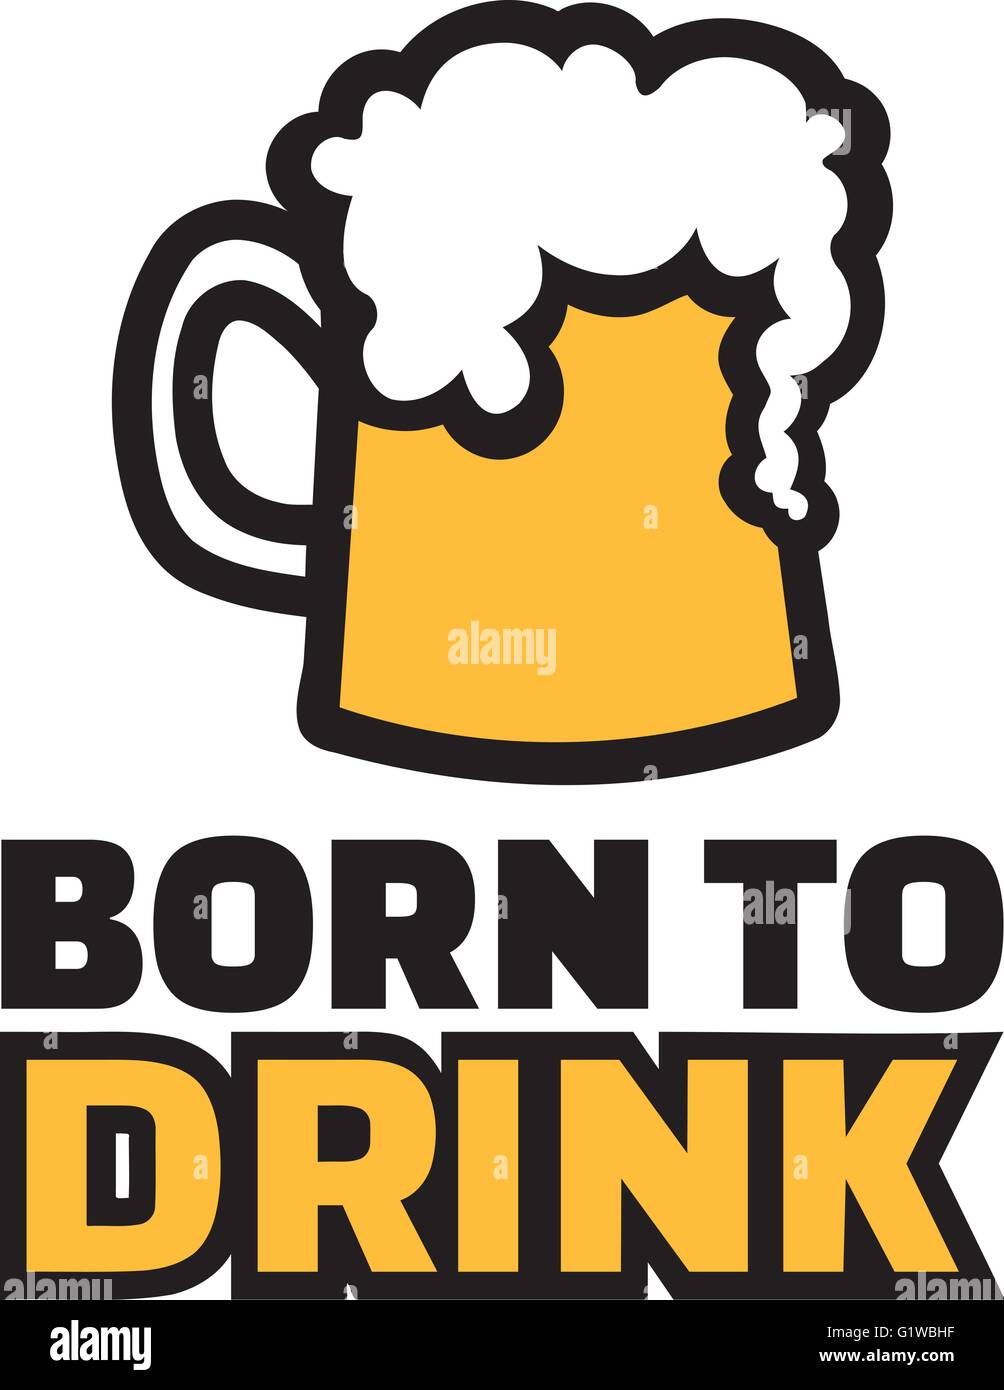 https://c8.alamy.com/comp/G1WBHF/beer-mug-with-slogan-born-to-drink-G1WBHF.jpg